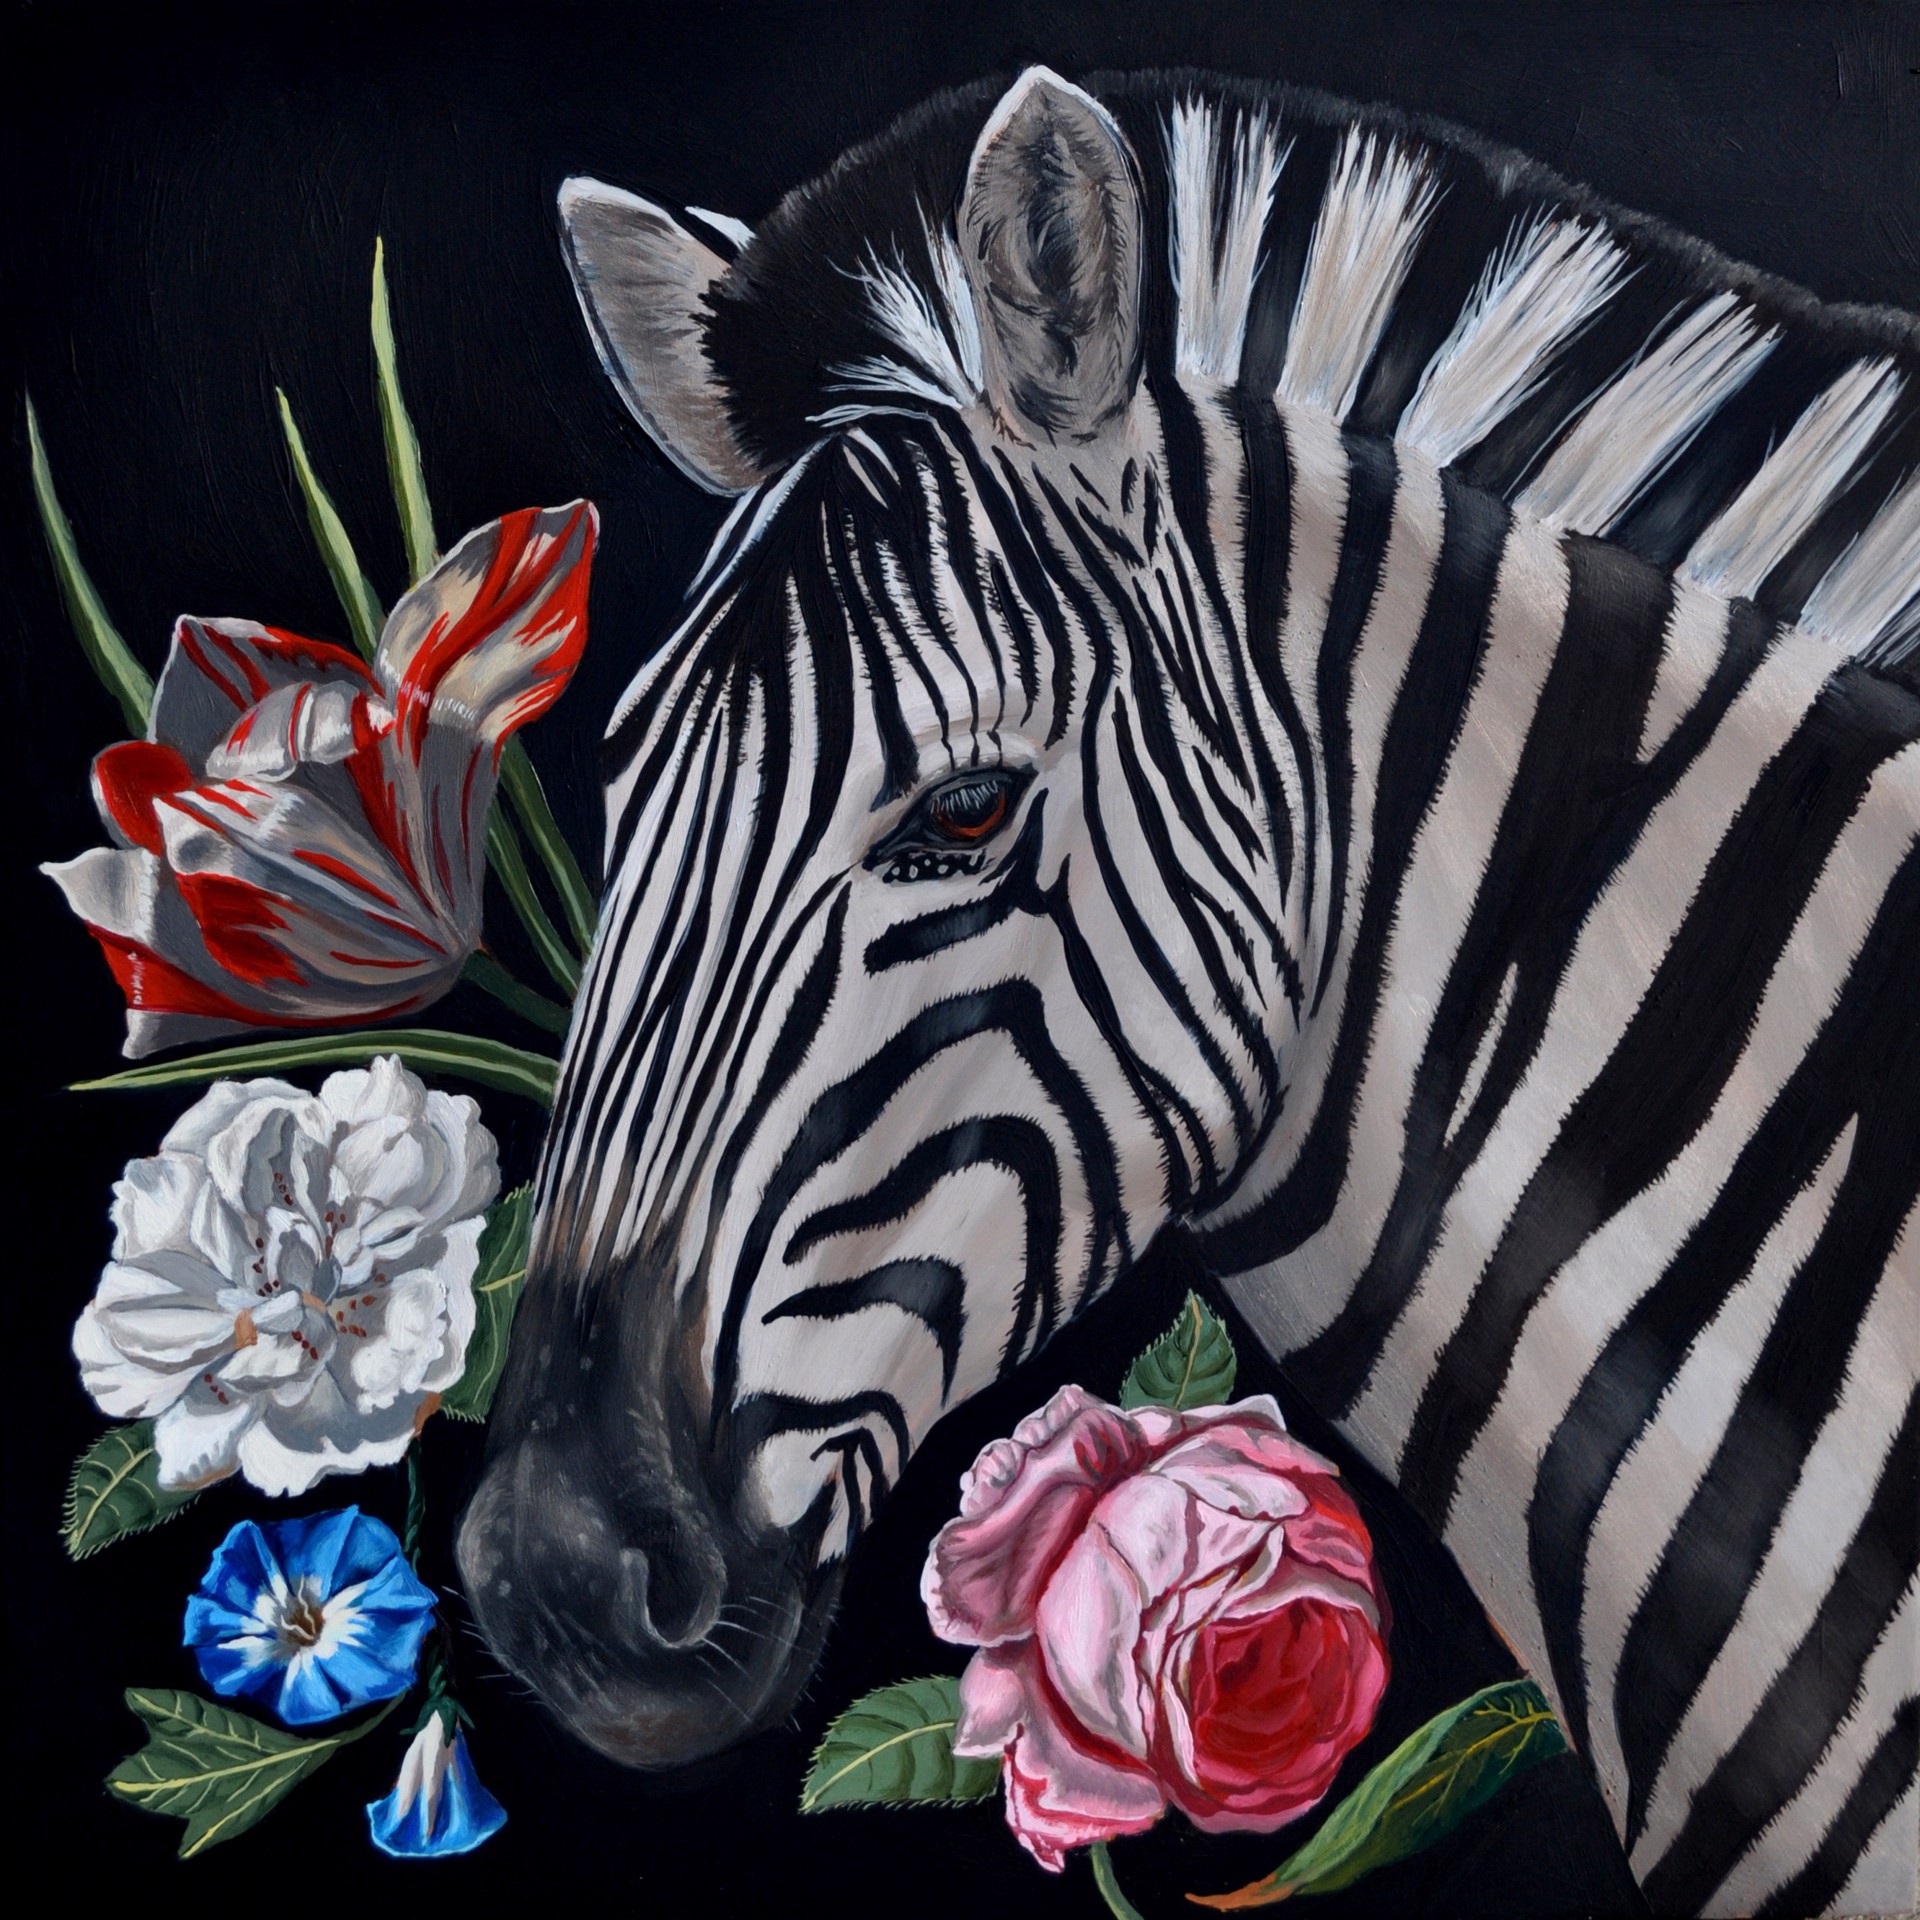 Portrait of a Zebra with Flowers by Robin Hextrum